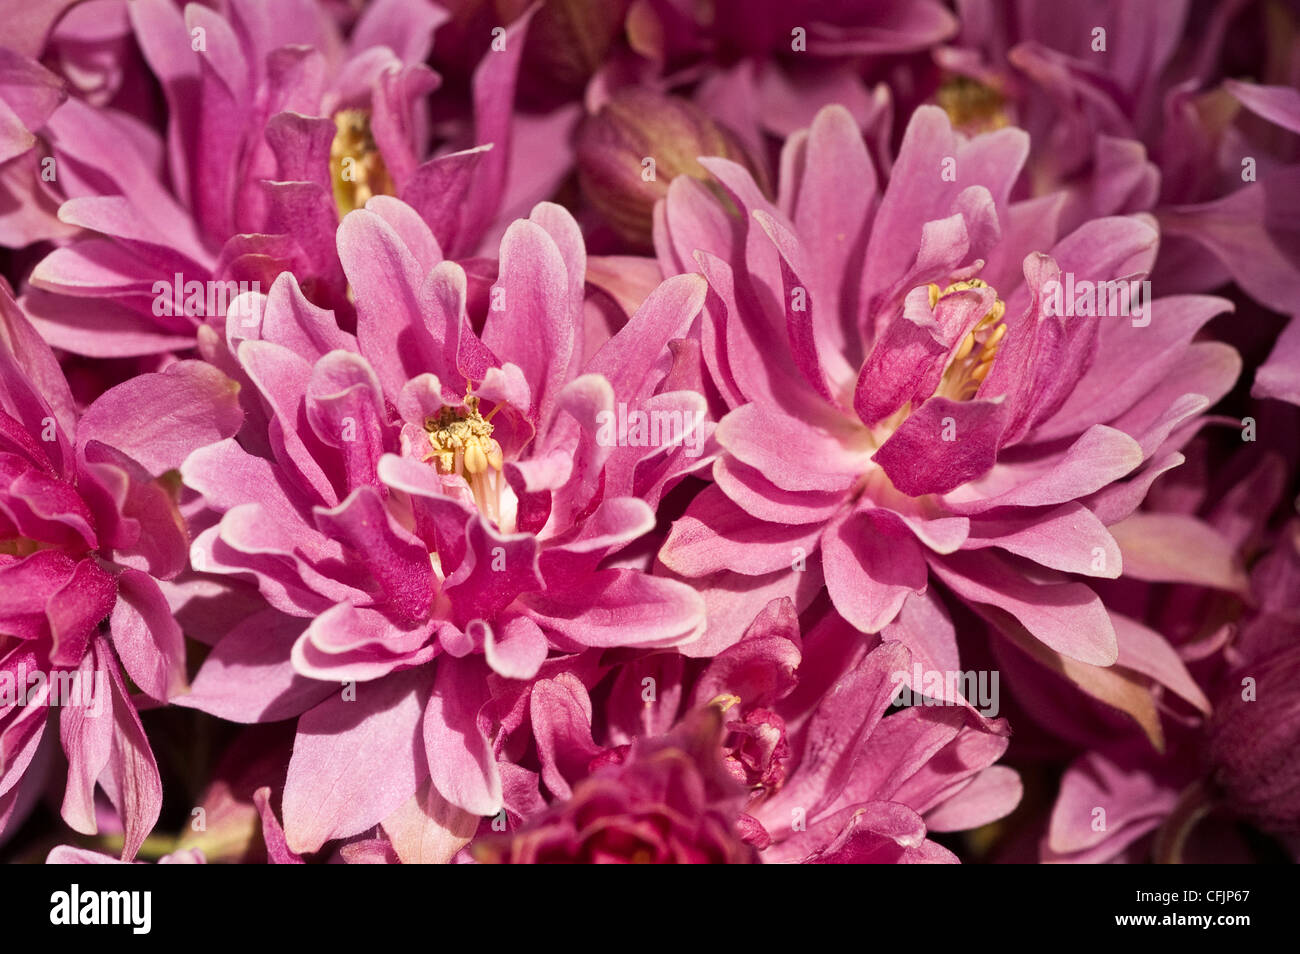 Pink flowers of Columbine var Clementine rose, Aquilegia vulgaris Stock Photo